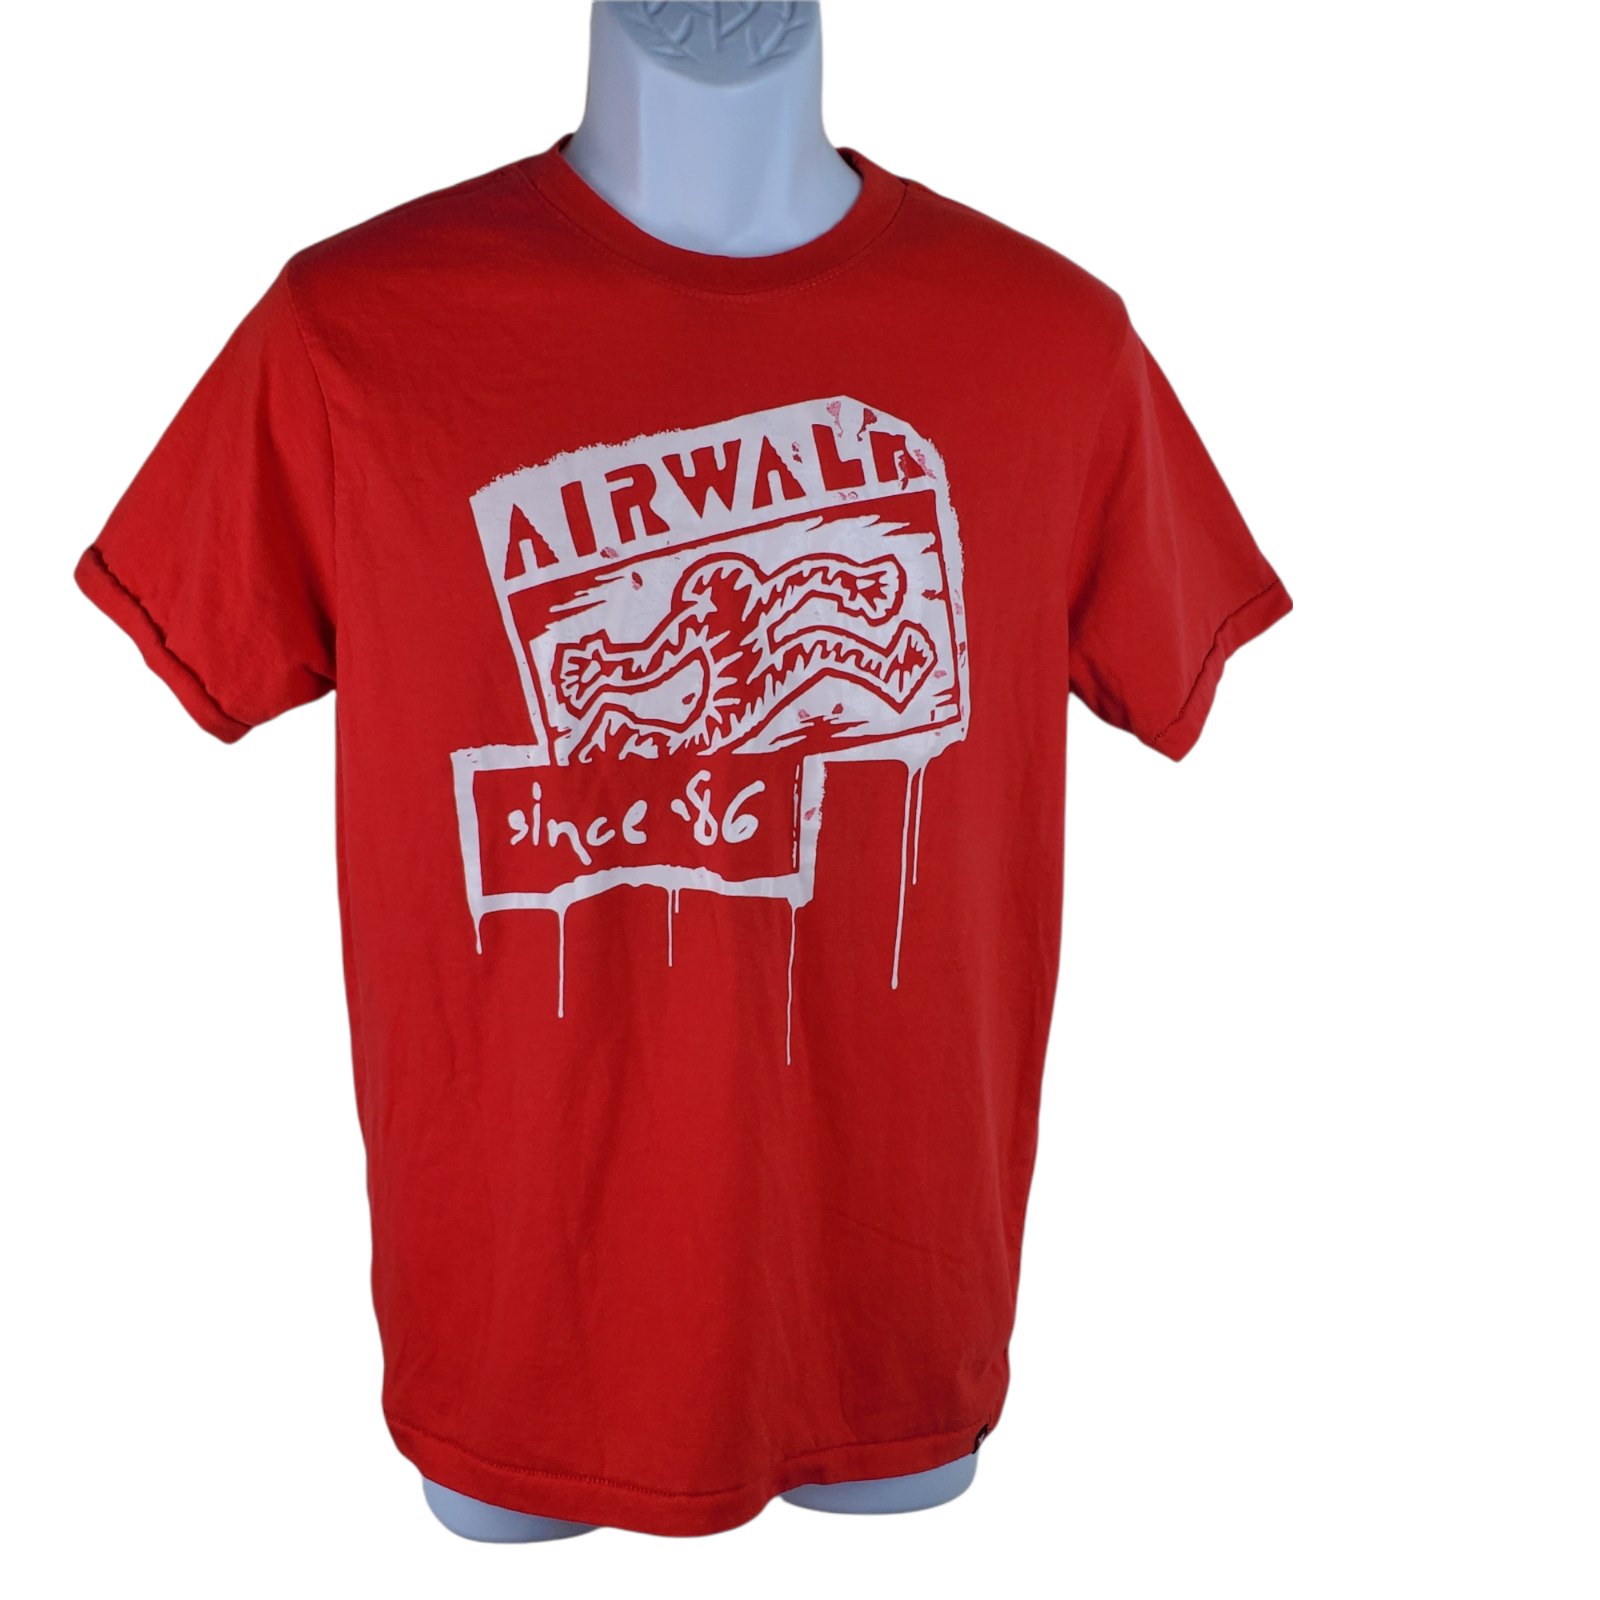 Vintage Airwalk Air Walk Red T Shirt S Skateboard 86 Shirt White Graphic